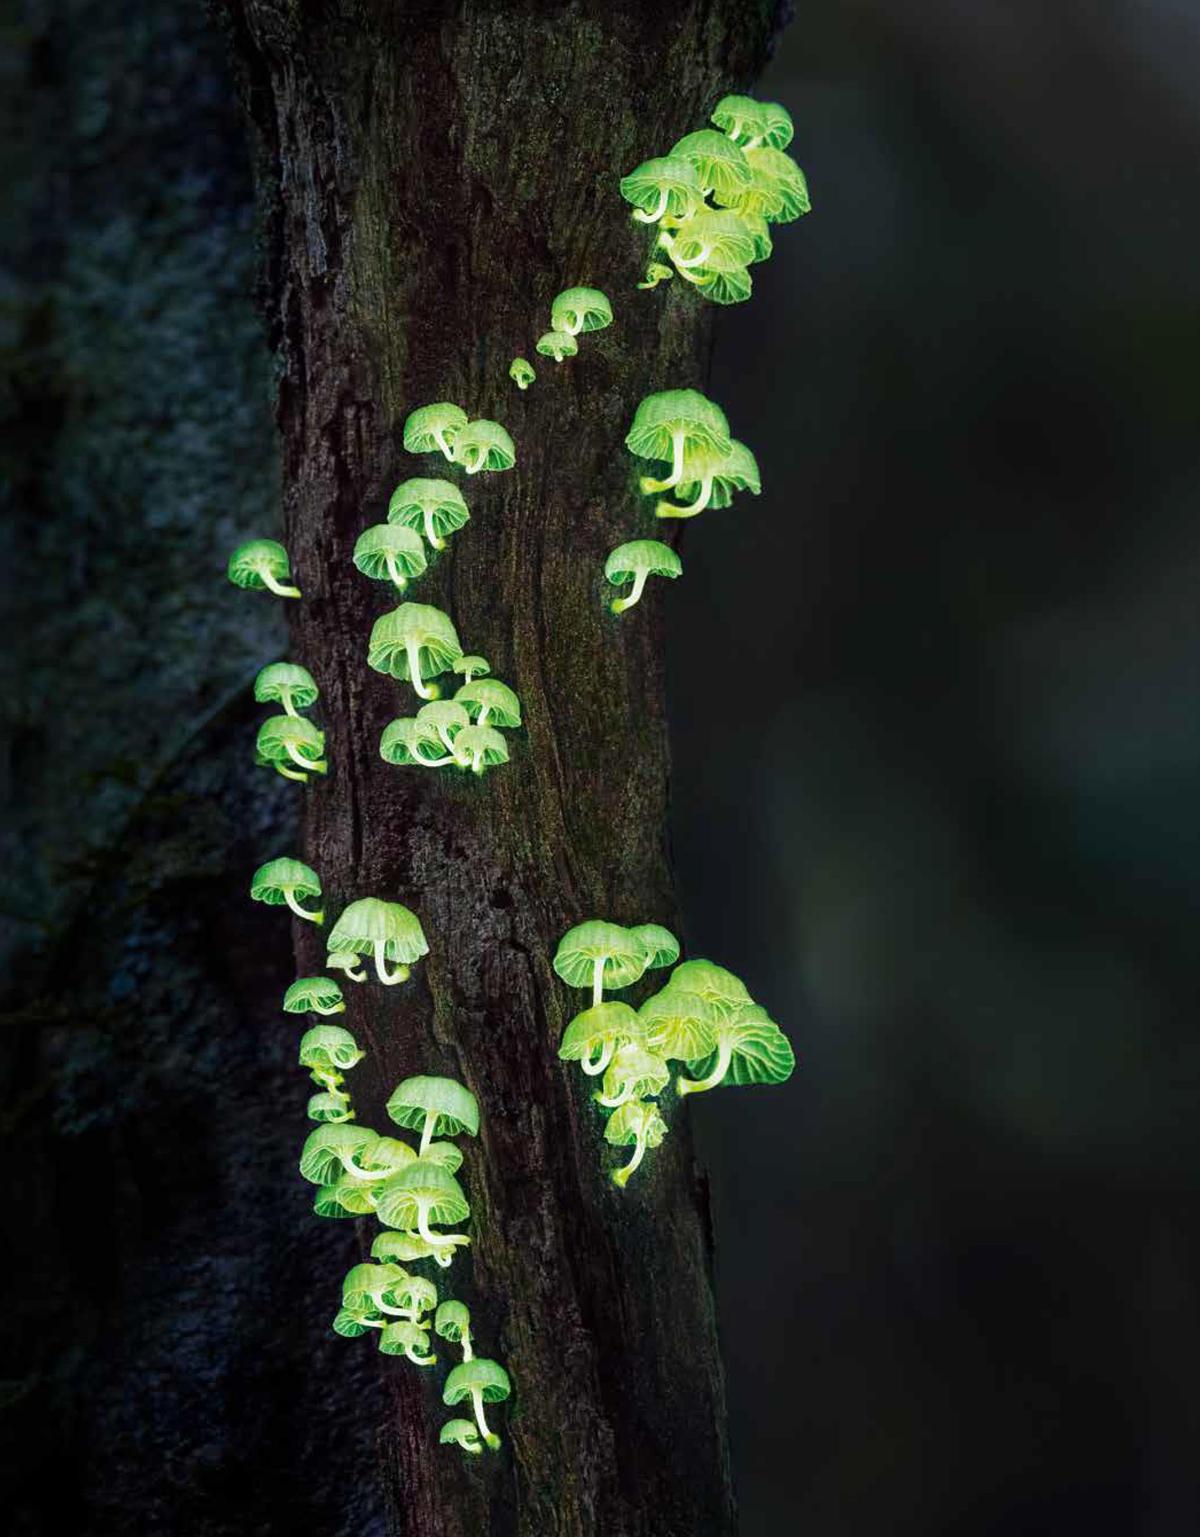 Forest light mushrooms. (Courtesy of <a href="https://timflach.com/">Tim Flach</a>)